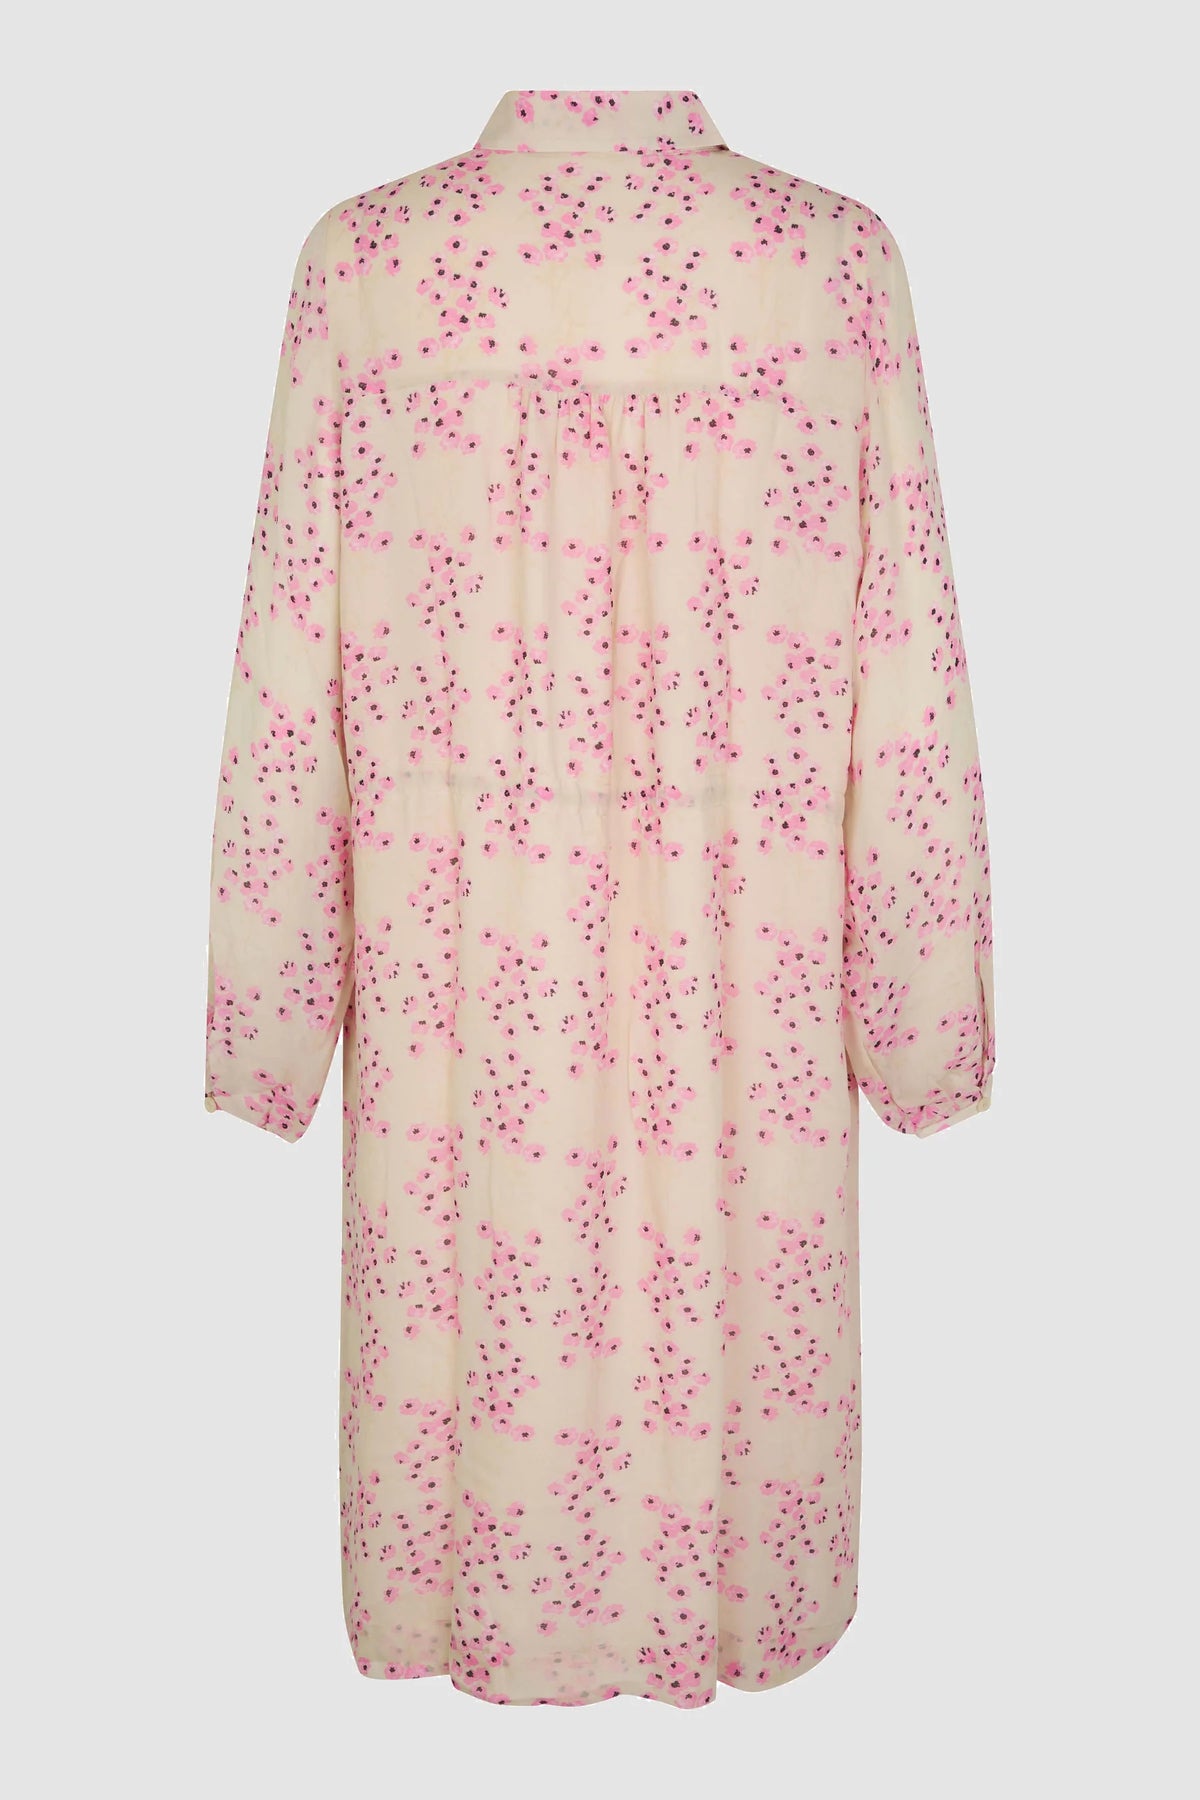 Ciloa Dress - Begonia Pink